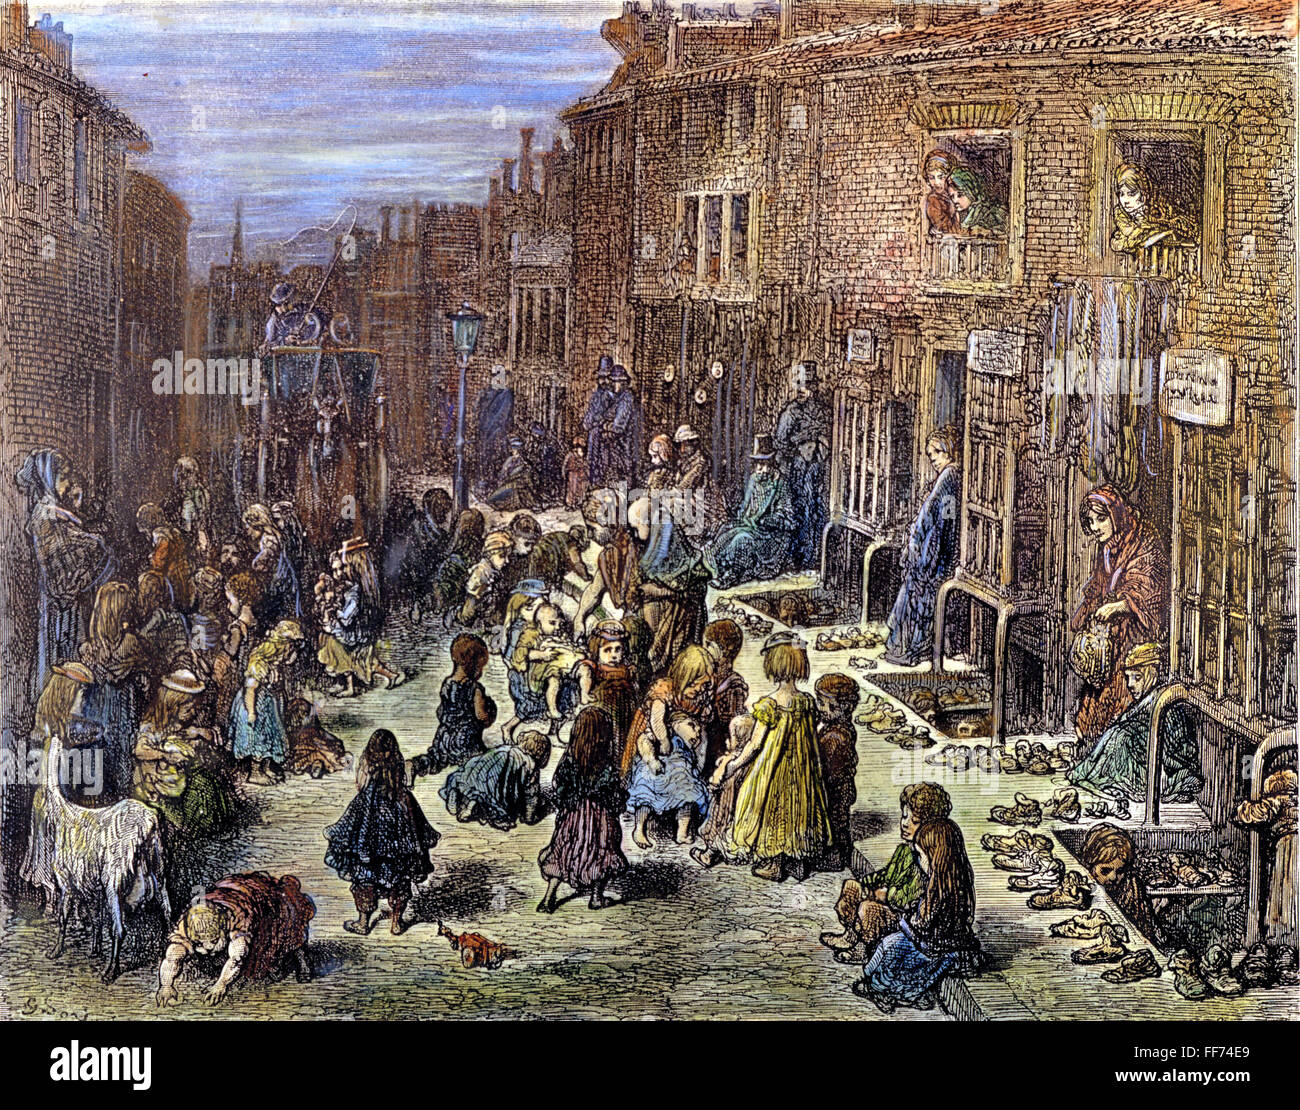 DOR╔: LONDON, 1872. /n'Dudley Street, Seven Dials. " Farbige Holzstich nach Gustave DorΘ aus "London: A Pilgrimage" 1872. Stockfoto